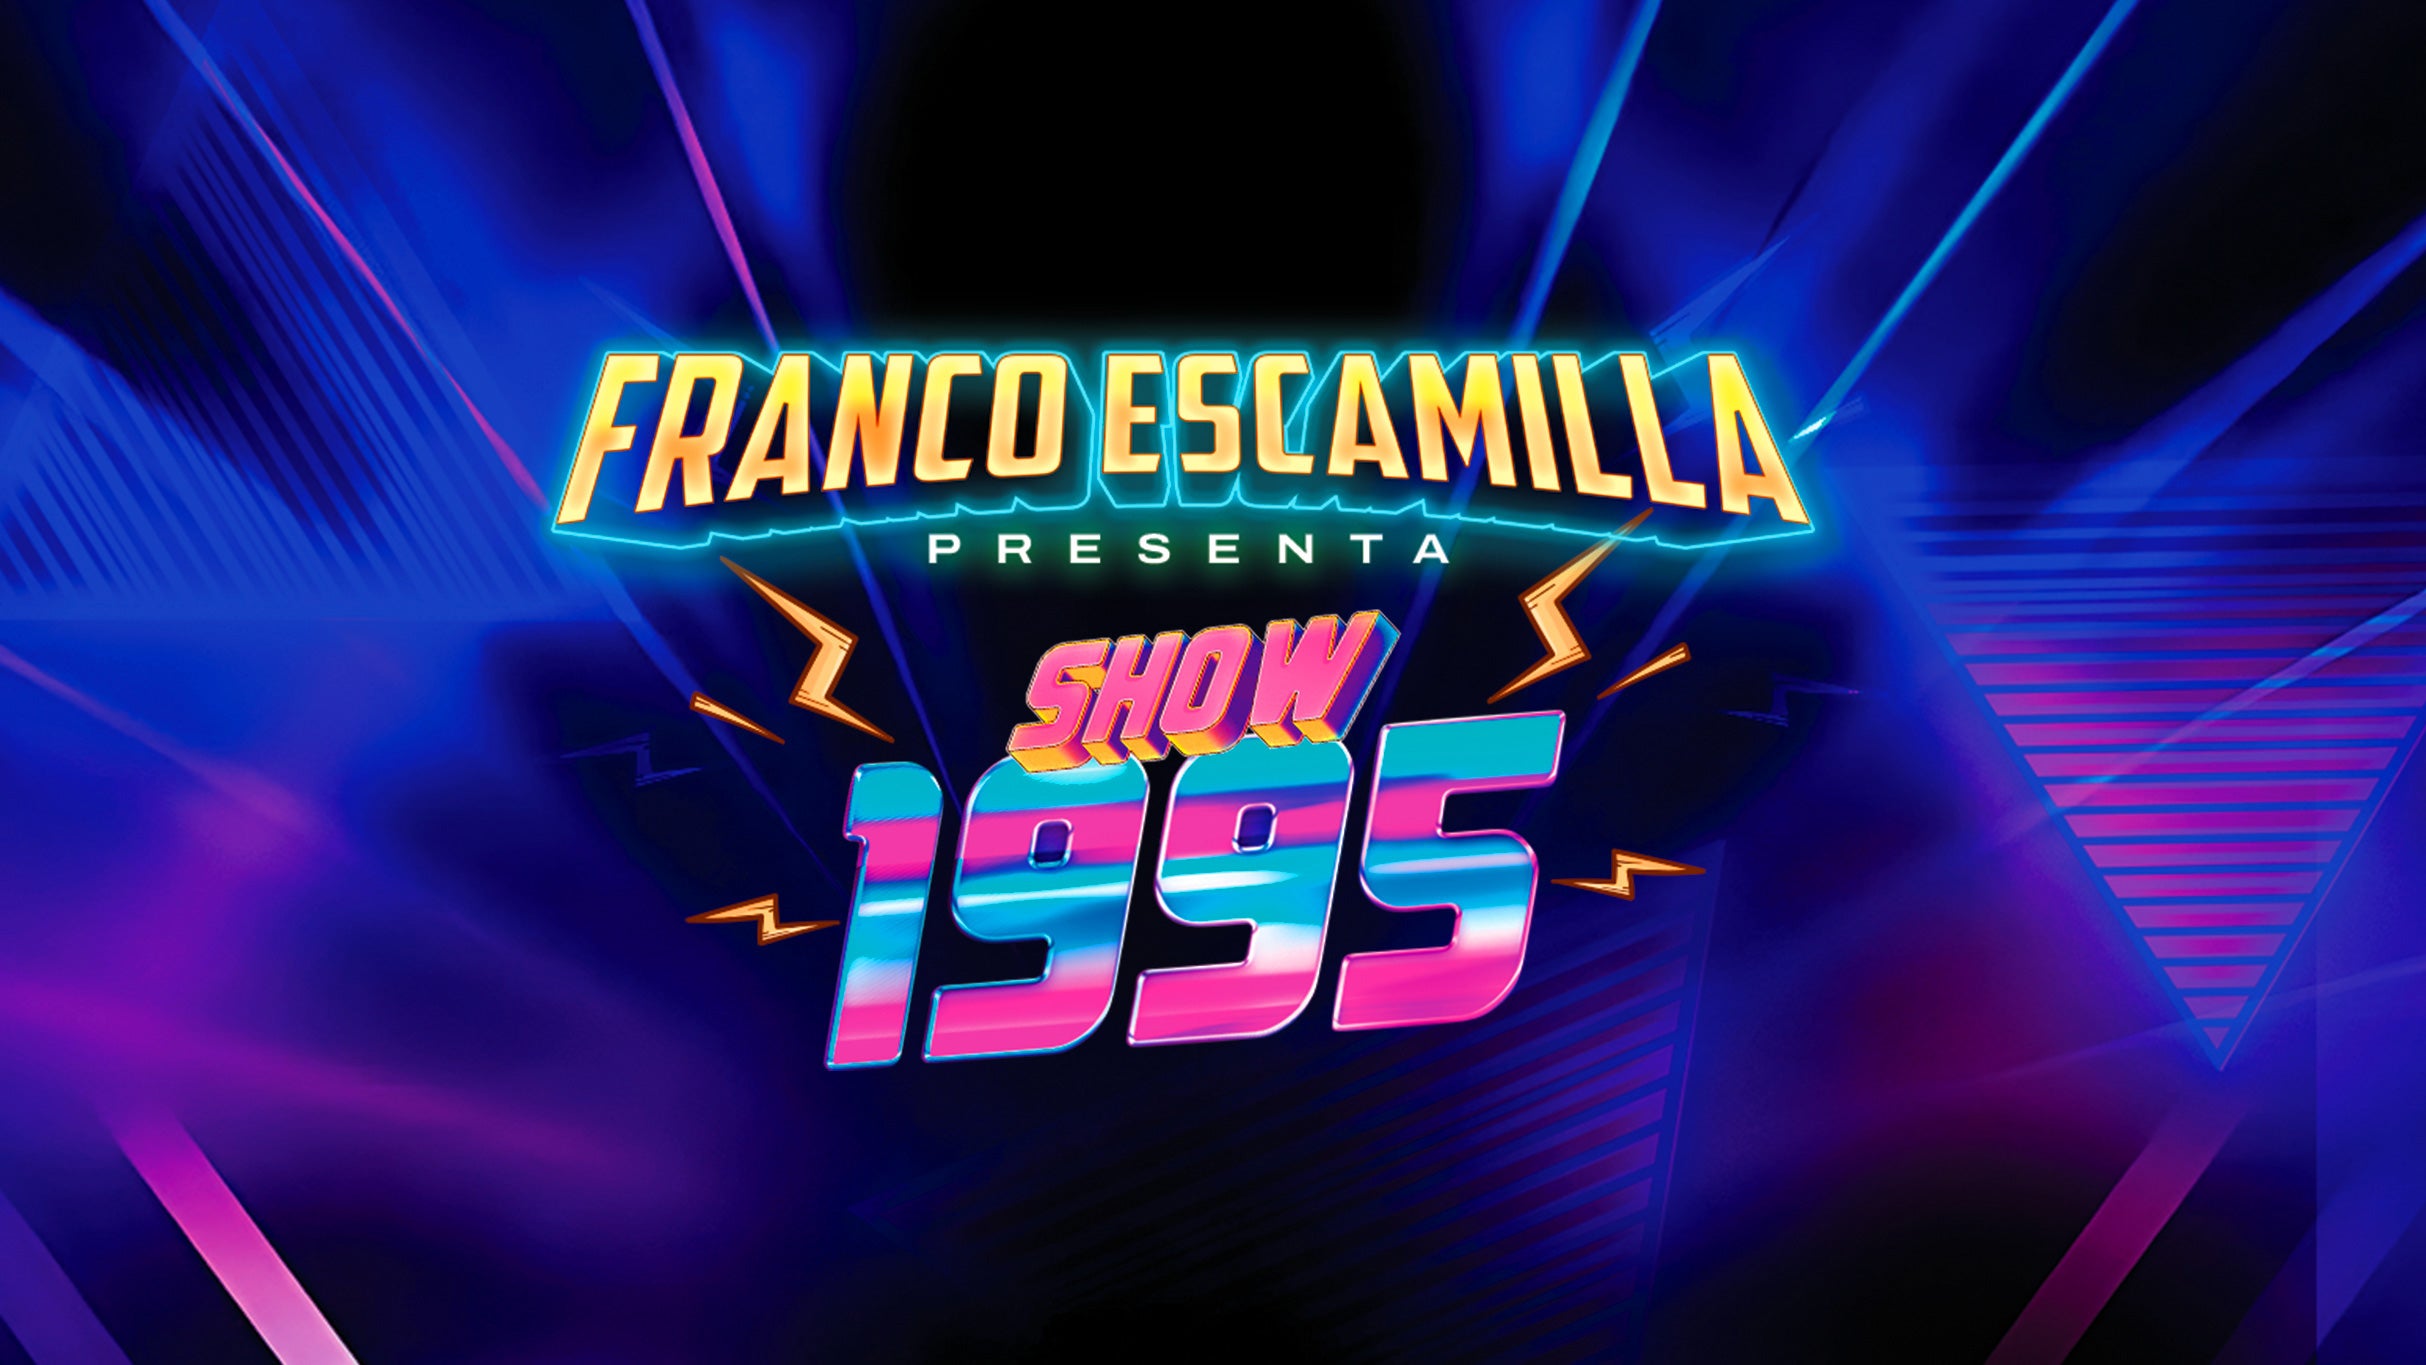 Franco Escamilla Presenta Show 1995